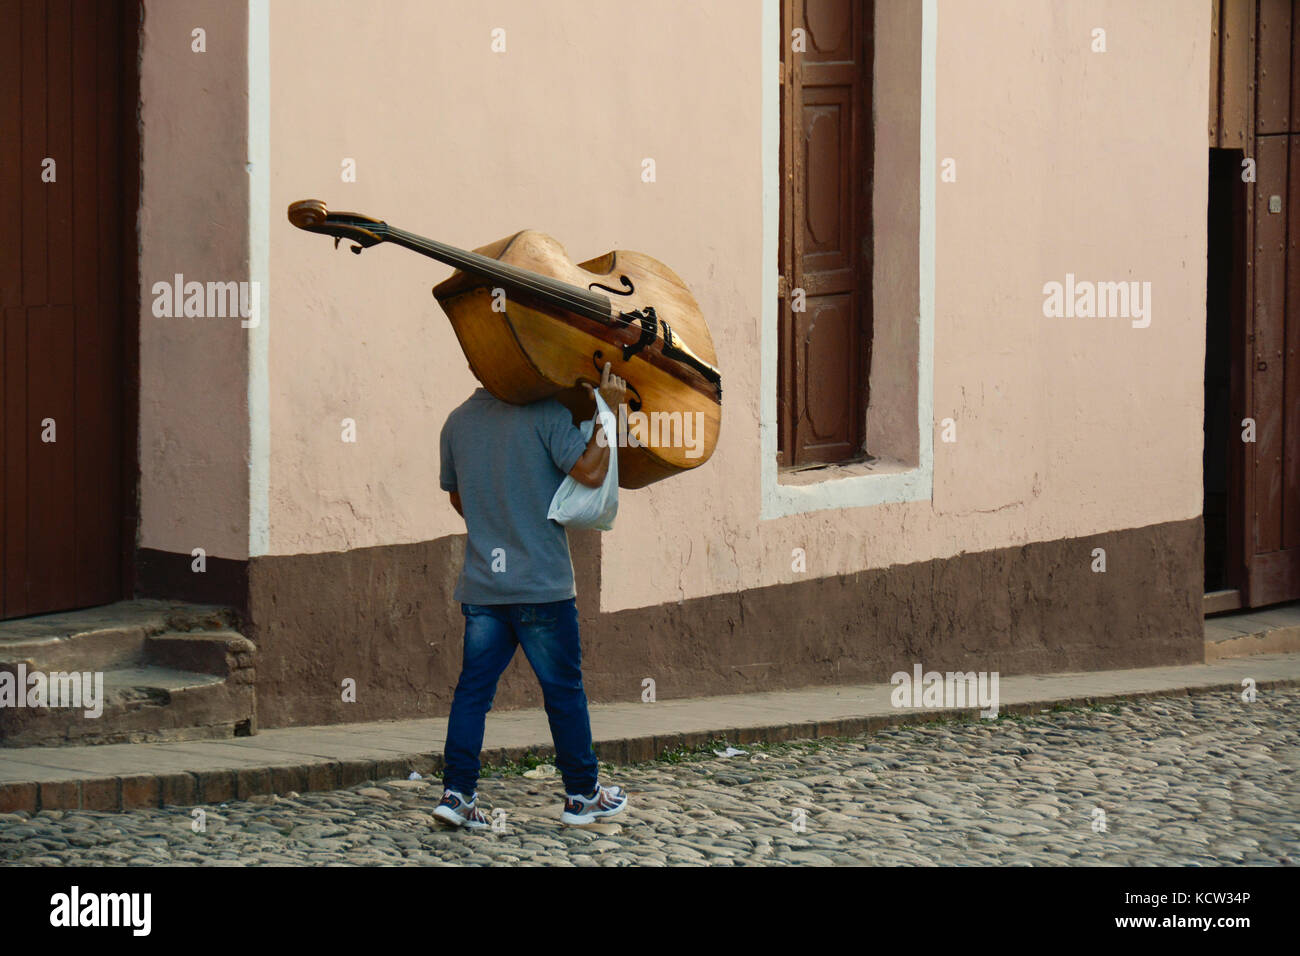 Man carrying a Double bass, Trinidad,  Cuba Stock Photo